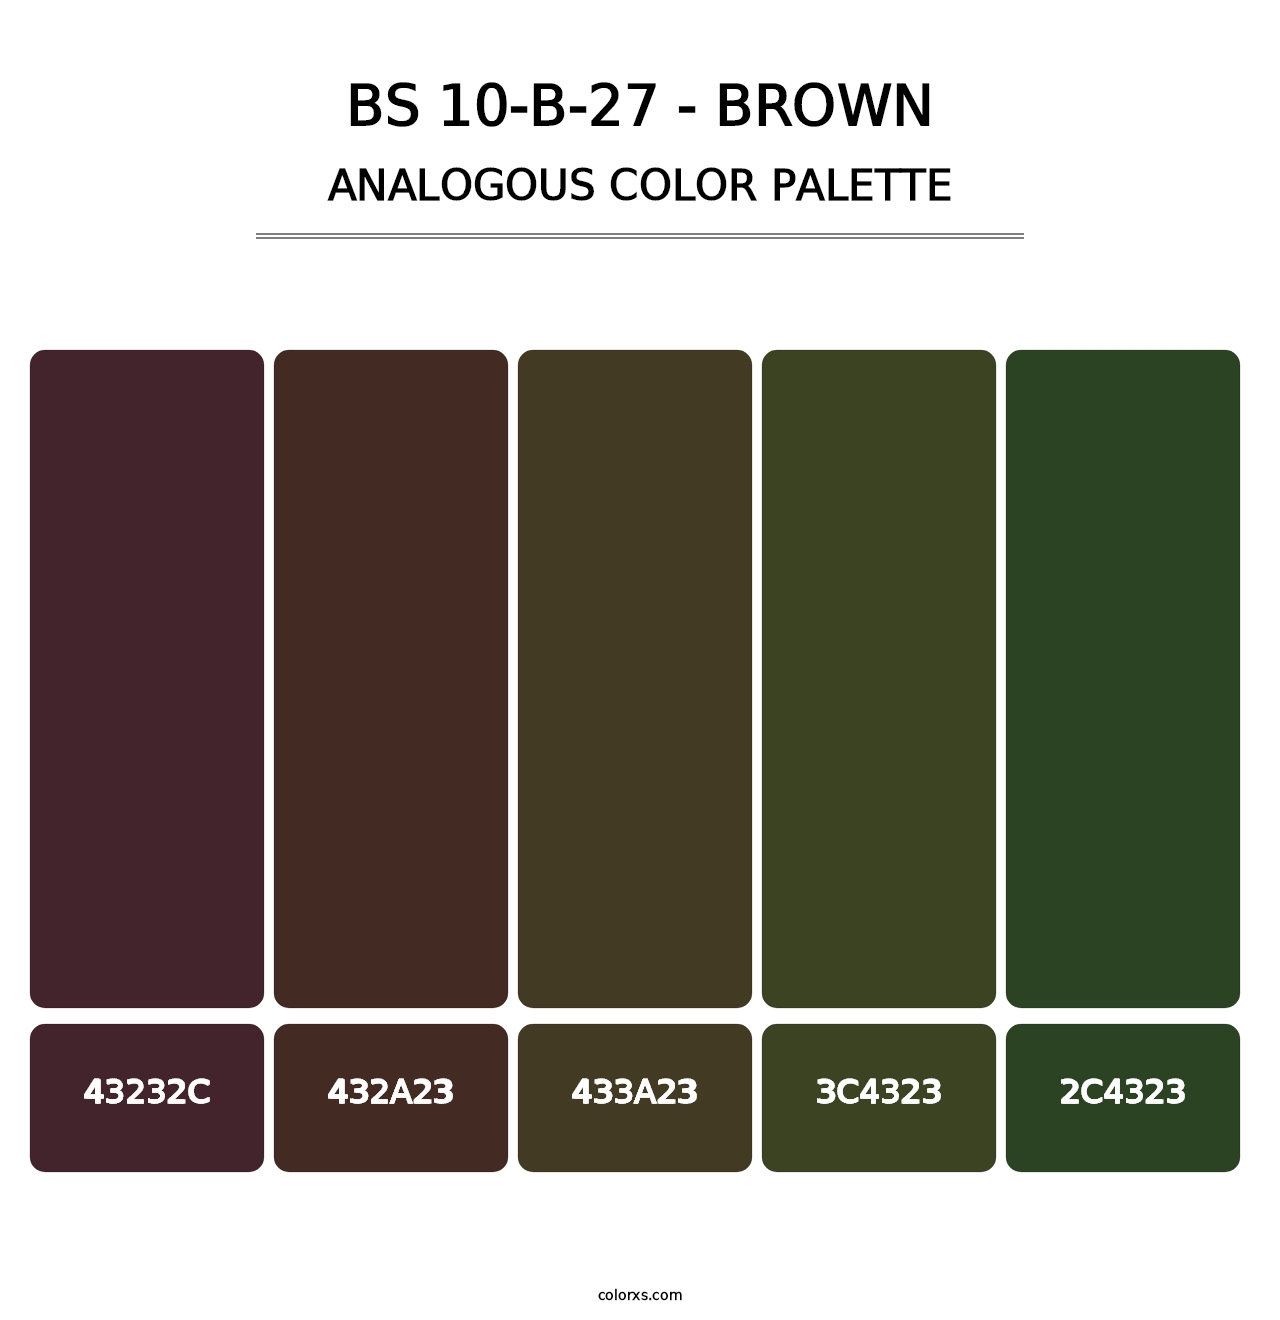 BS 10-B-27 - Brown - Analogous Color Palette